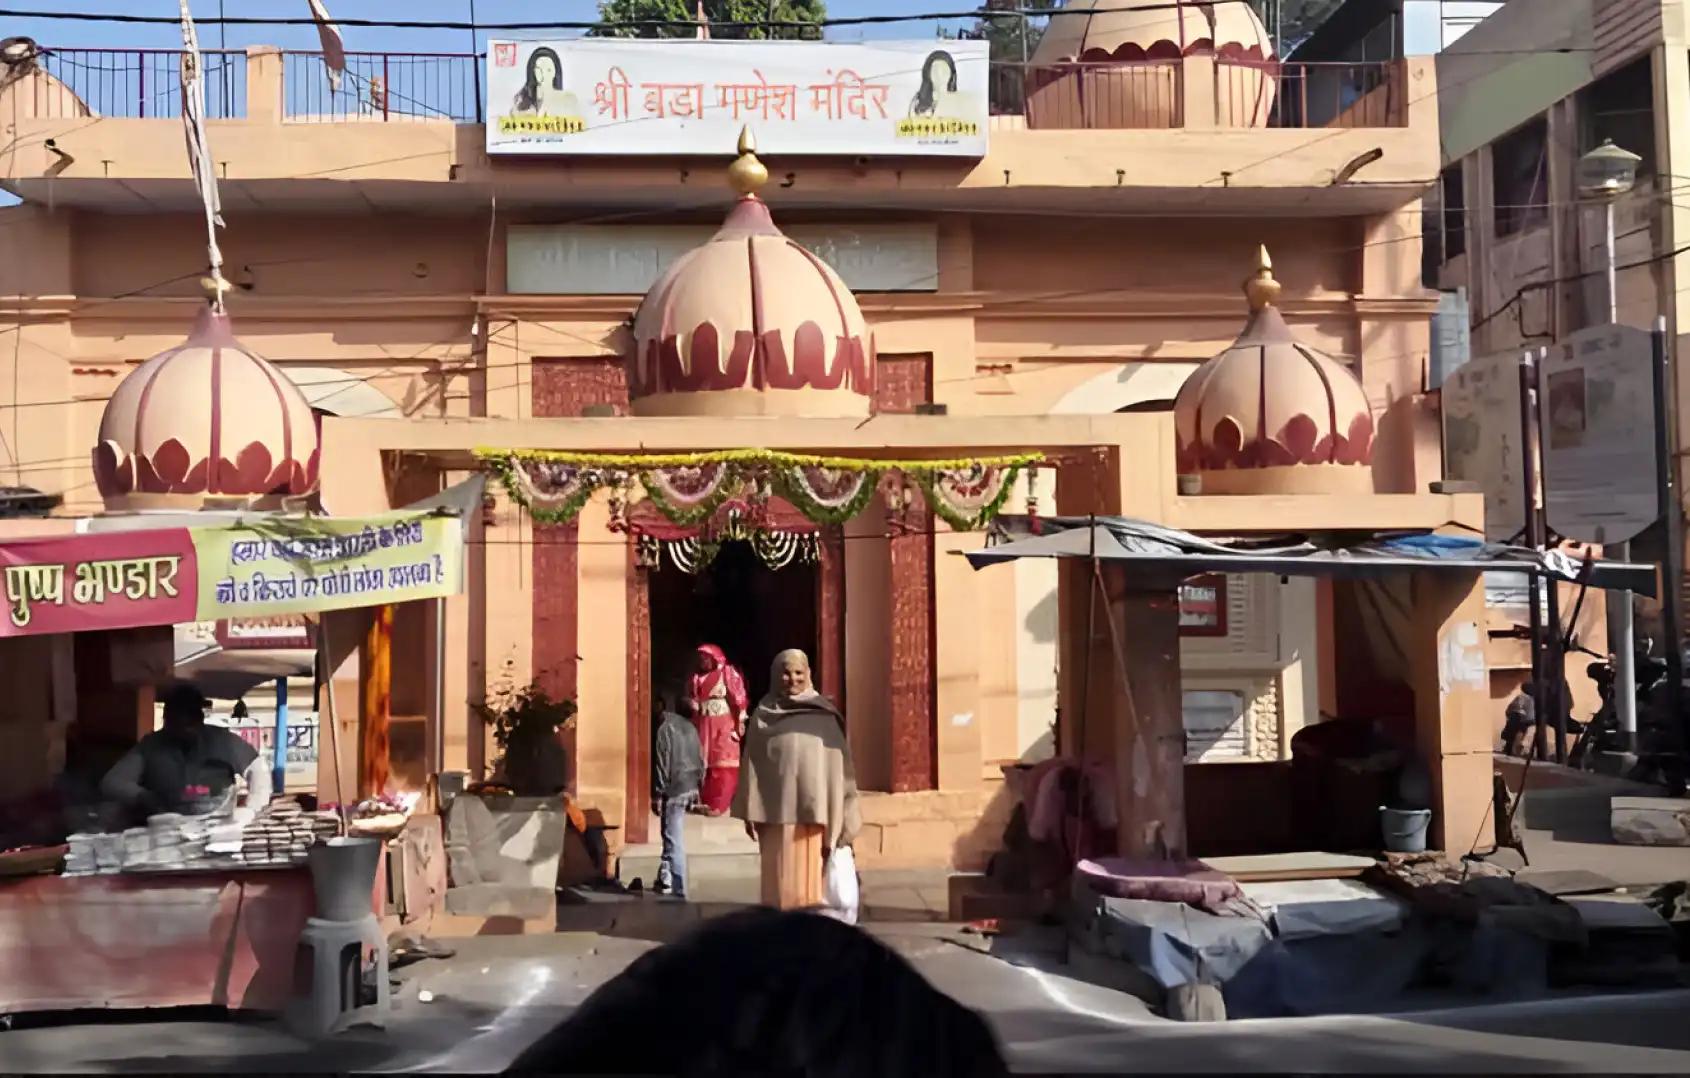 Shri Mankameshwar Mahadev Temple,Ujjain, Madhya Pradesh